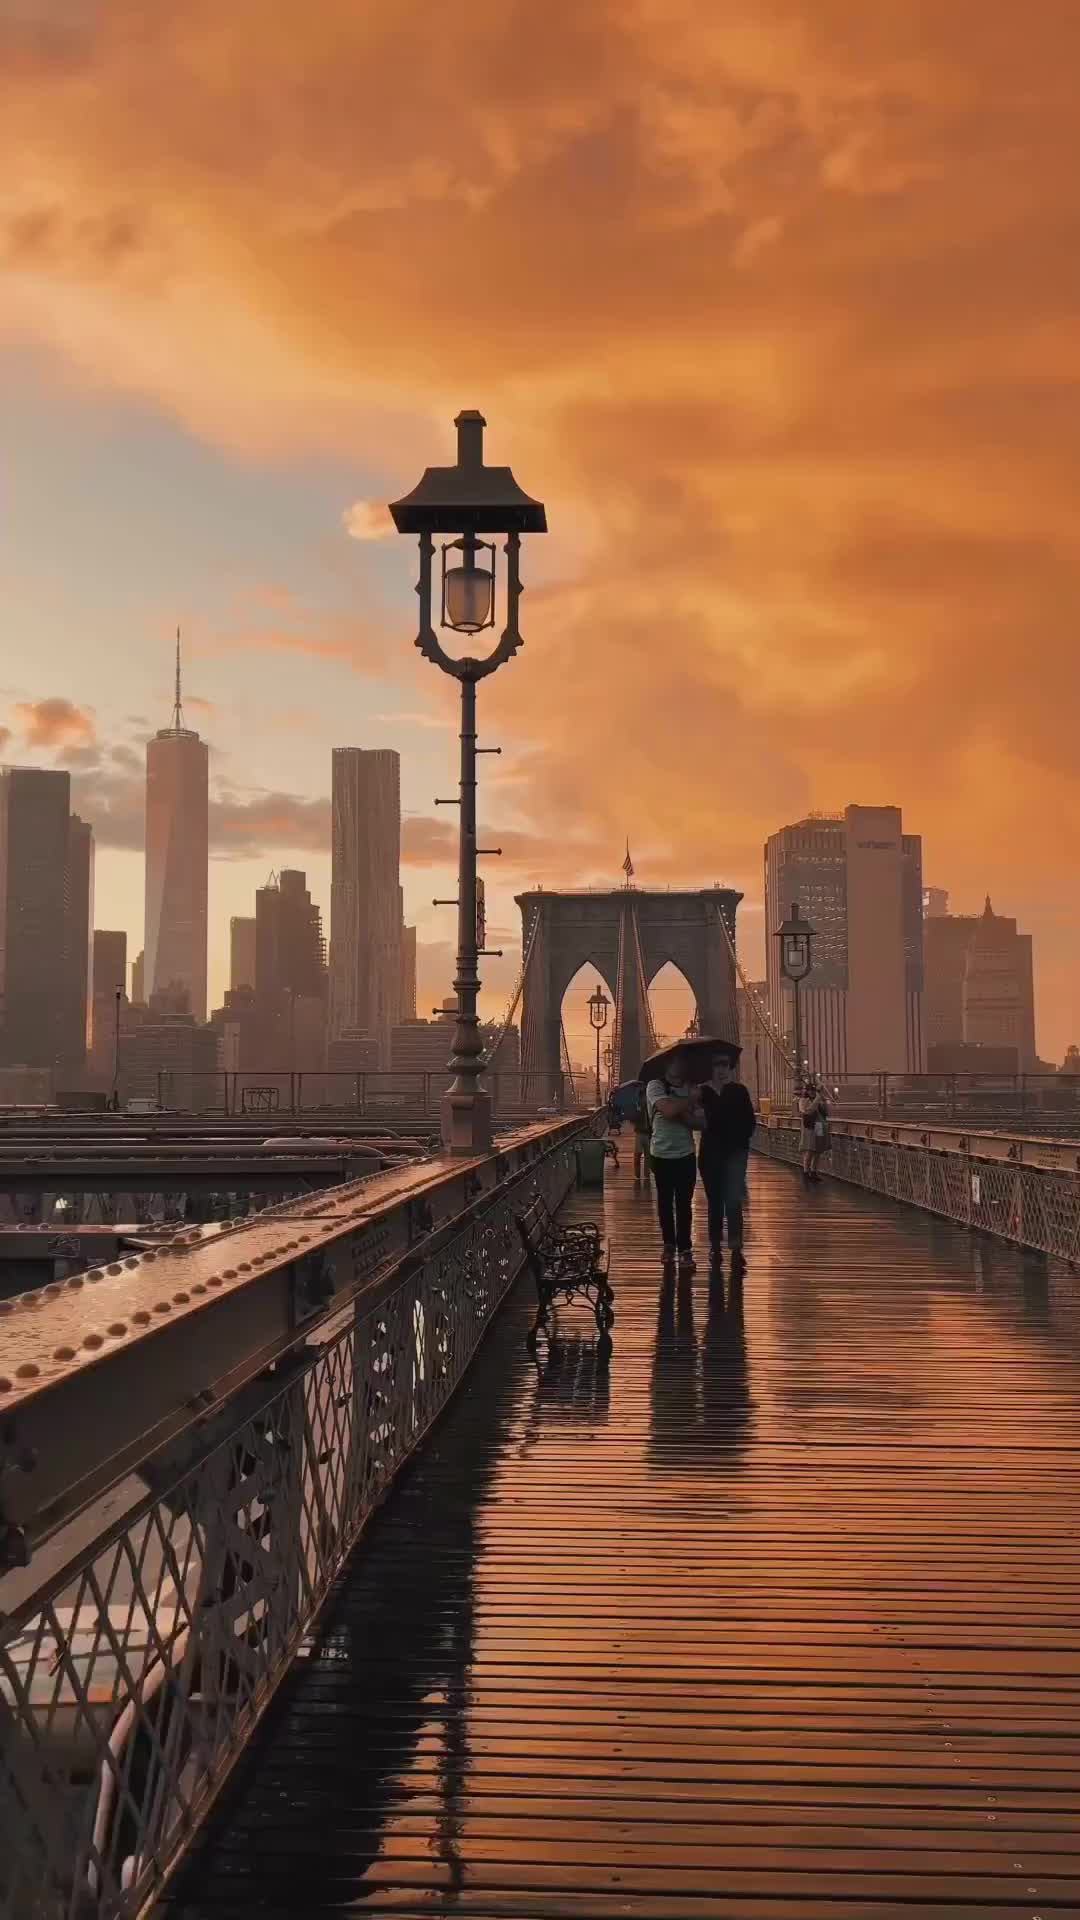 Rainy Days in Gotham City – New York's Urban Magic